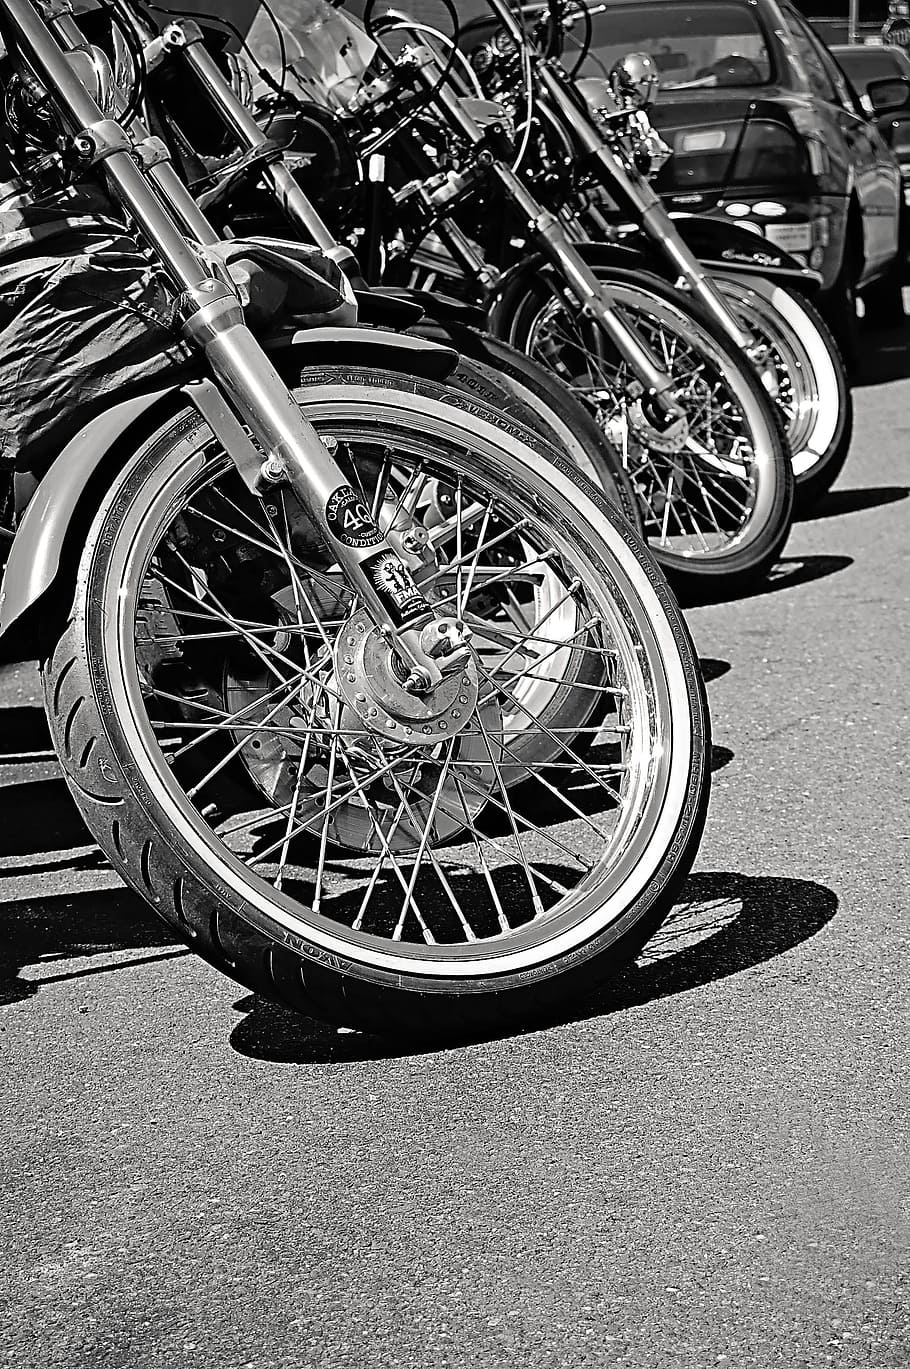 blanco y negro, fila, motos, transporte, viajes, bicicleta, cerdo, vintage, antiguo, rueda